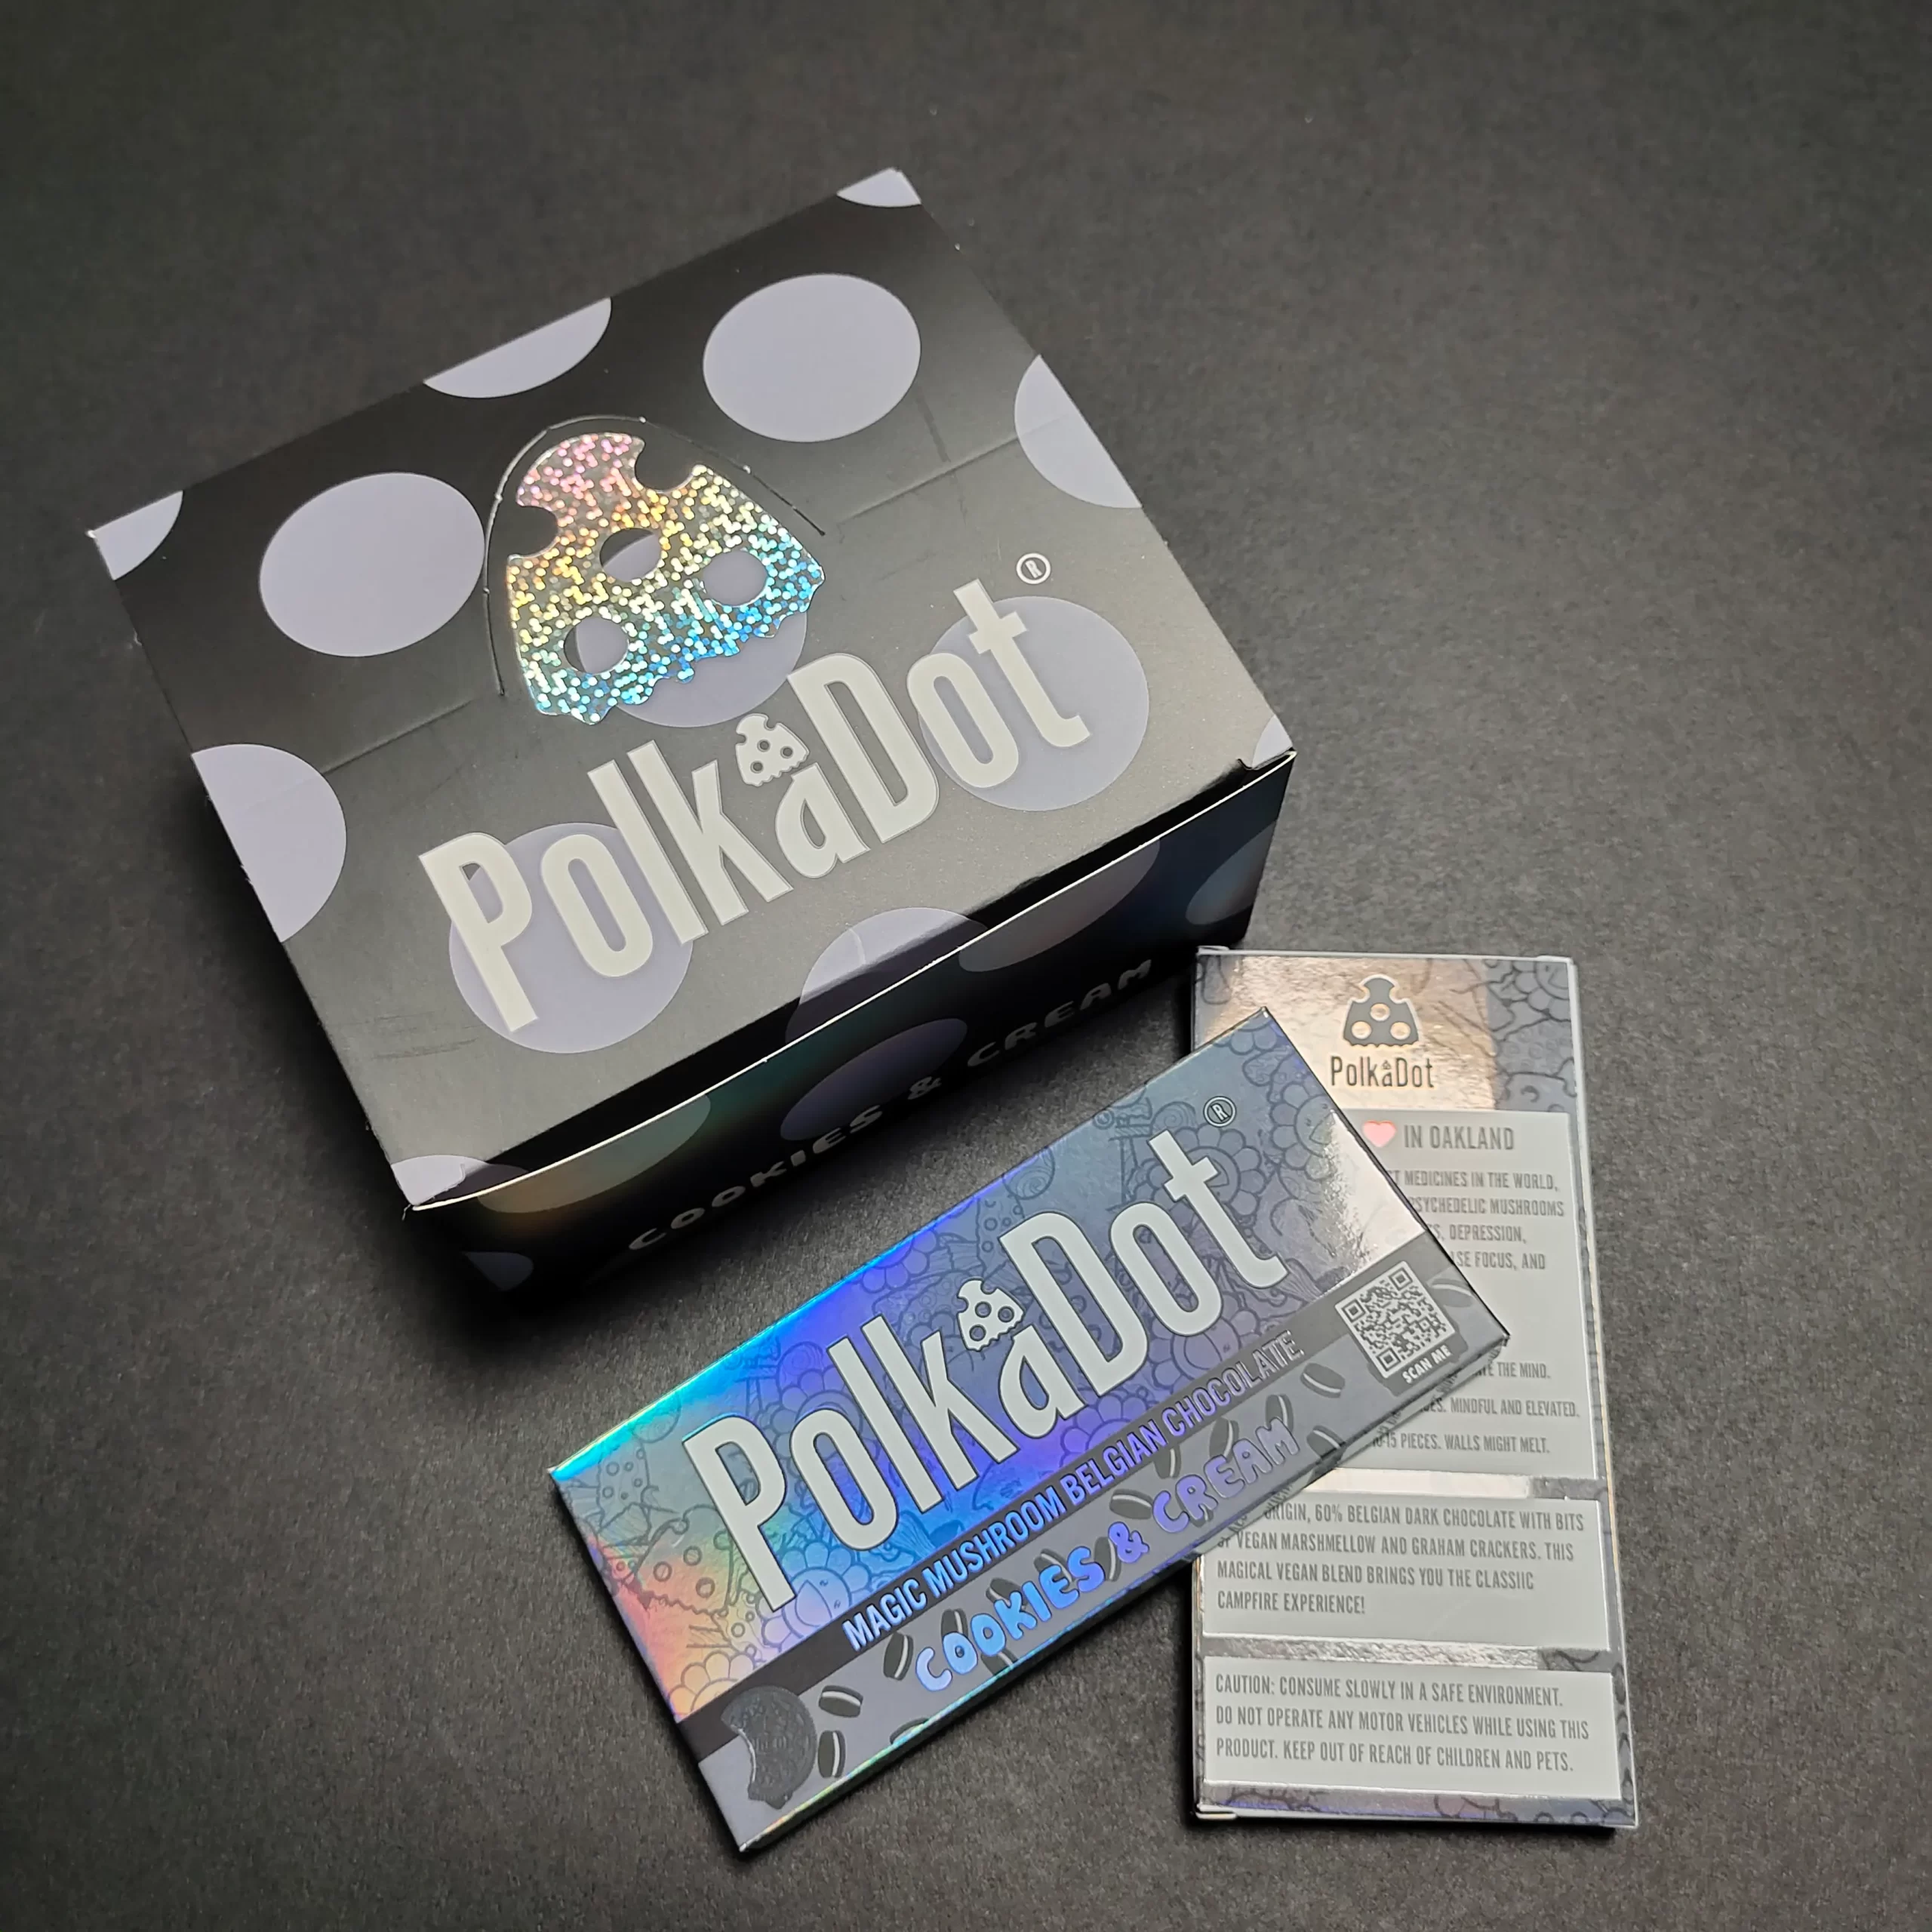 Official Polka Dot Chocolate Shop - Magic in polkadot shroom bars